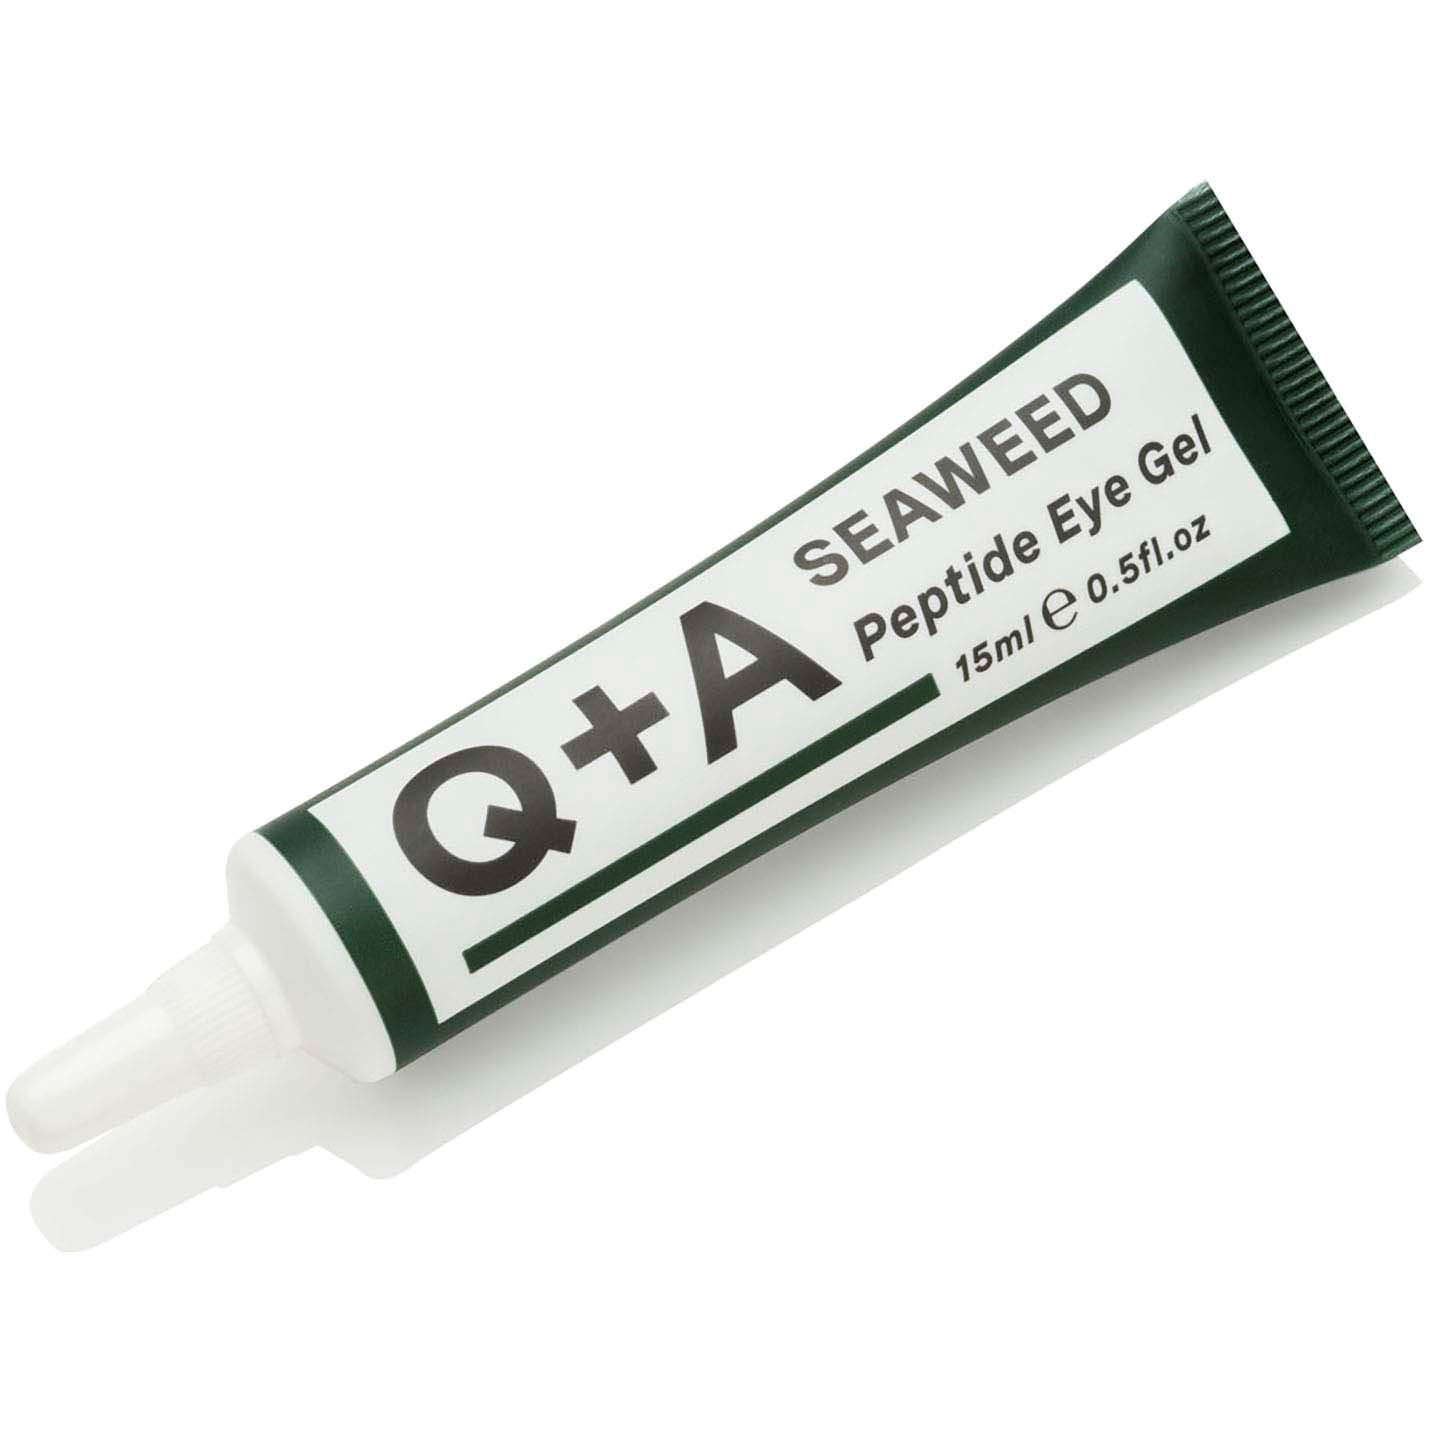 Q+A Seaweed Peptide Eye Gel 15 ml